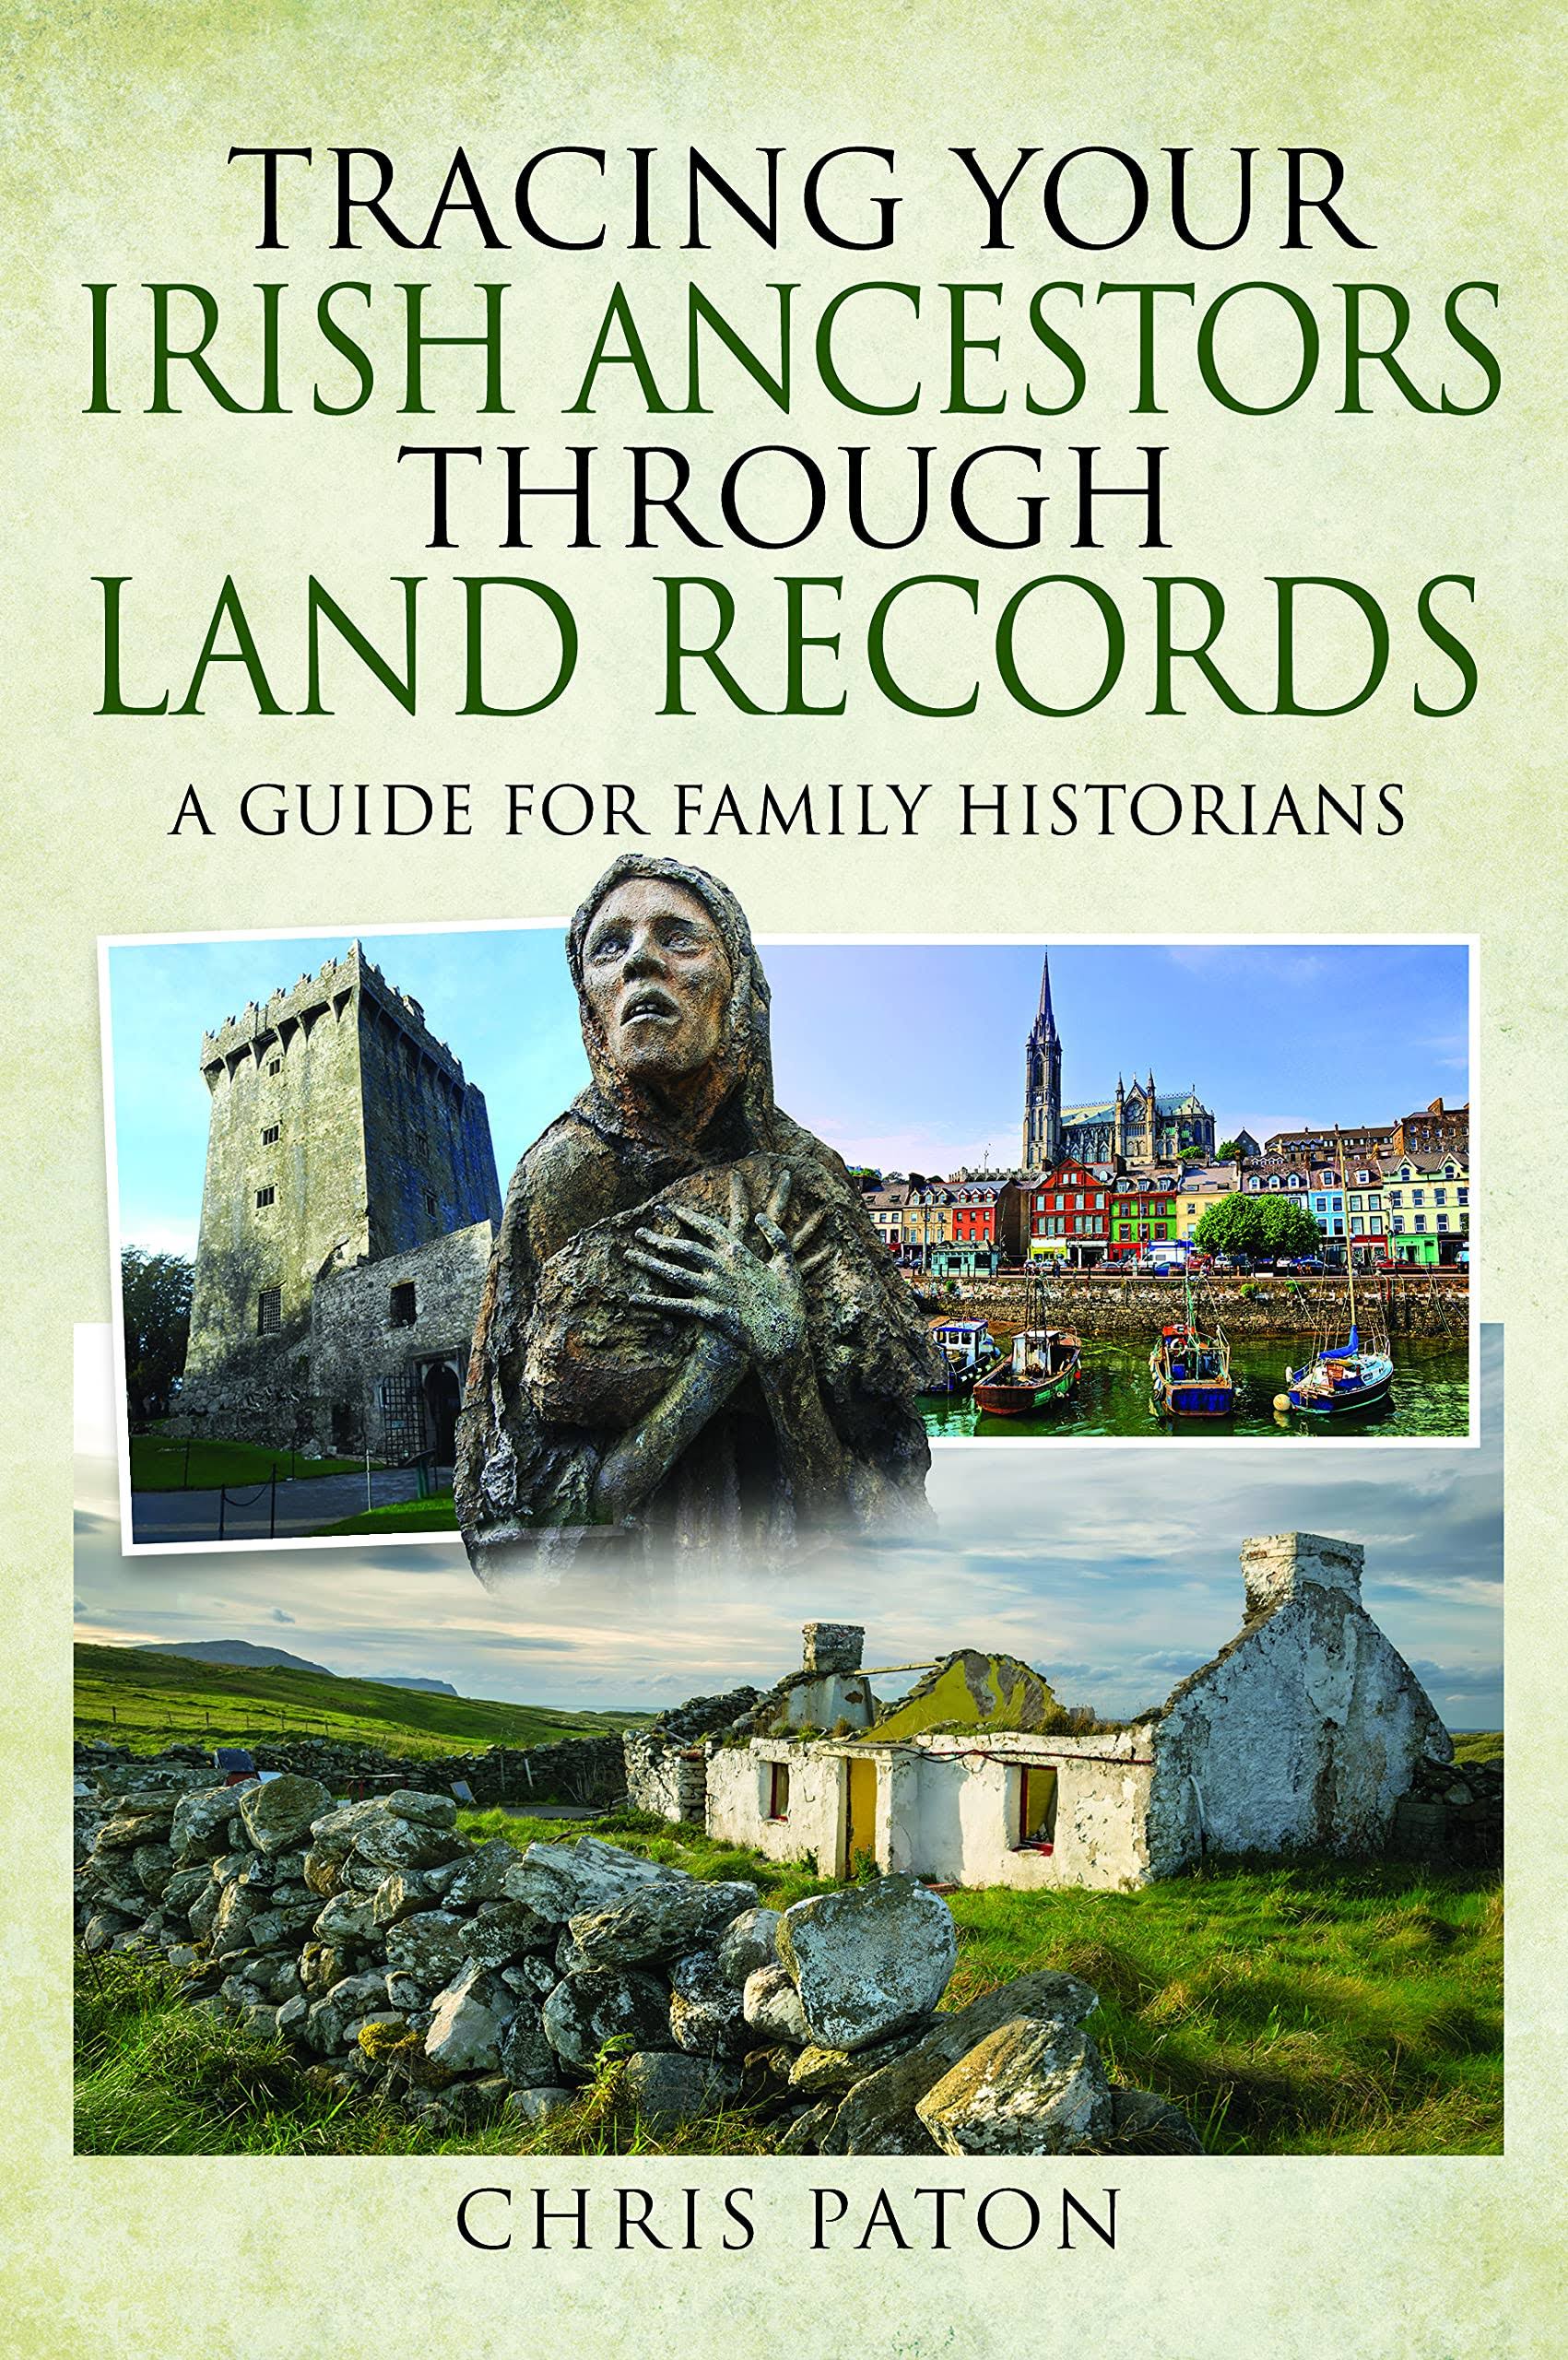 Tracing Your Irish Ancestors Through Land Records by Chris Paton